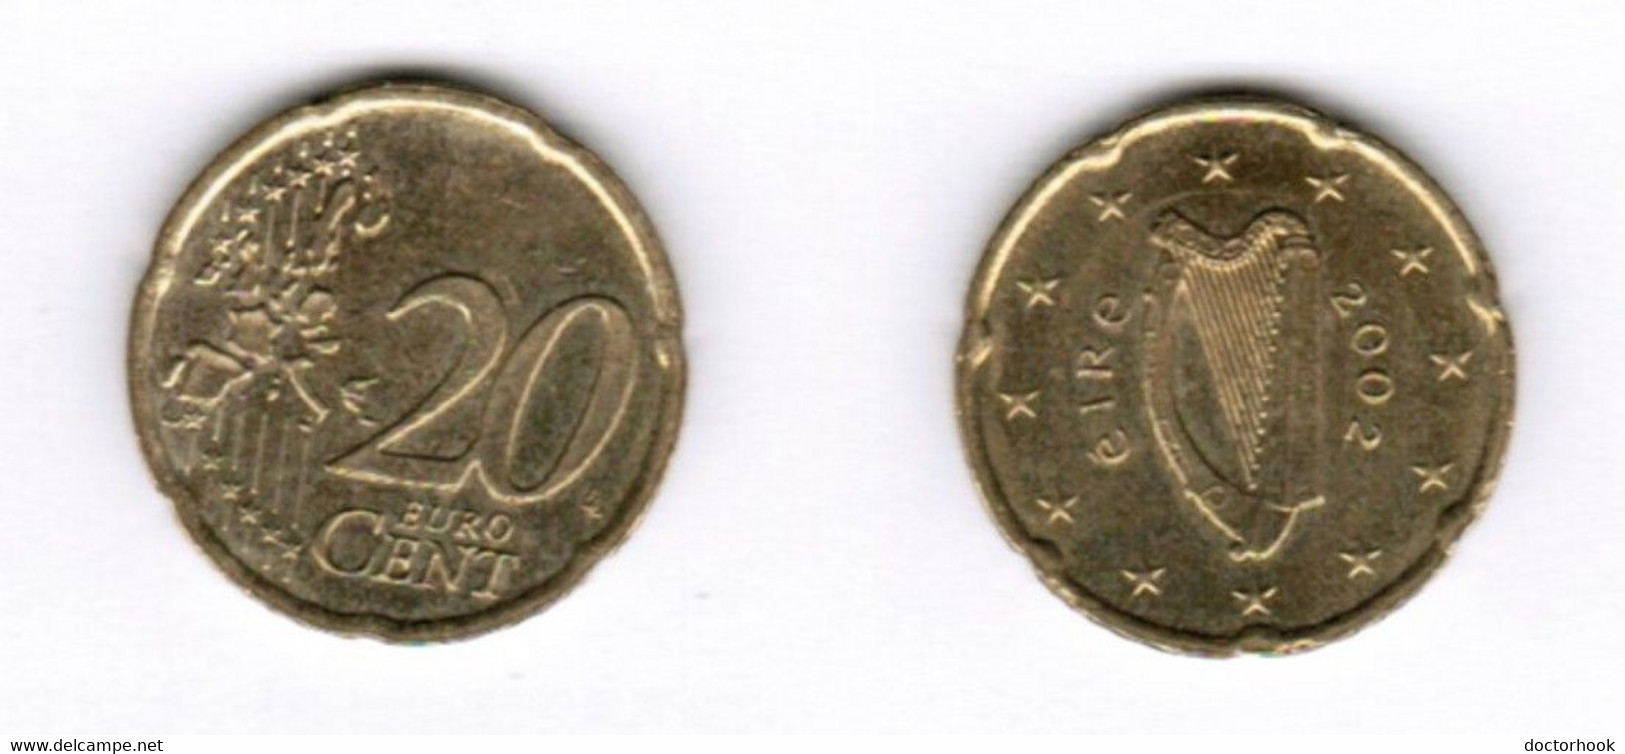 IRELAND   20 EURO CENTS 2002 (KM # 36) #7049 - Irland